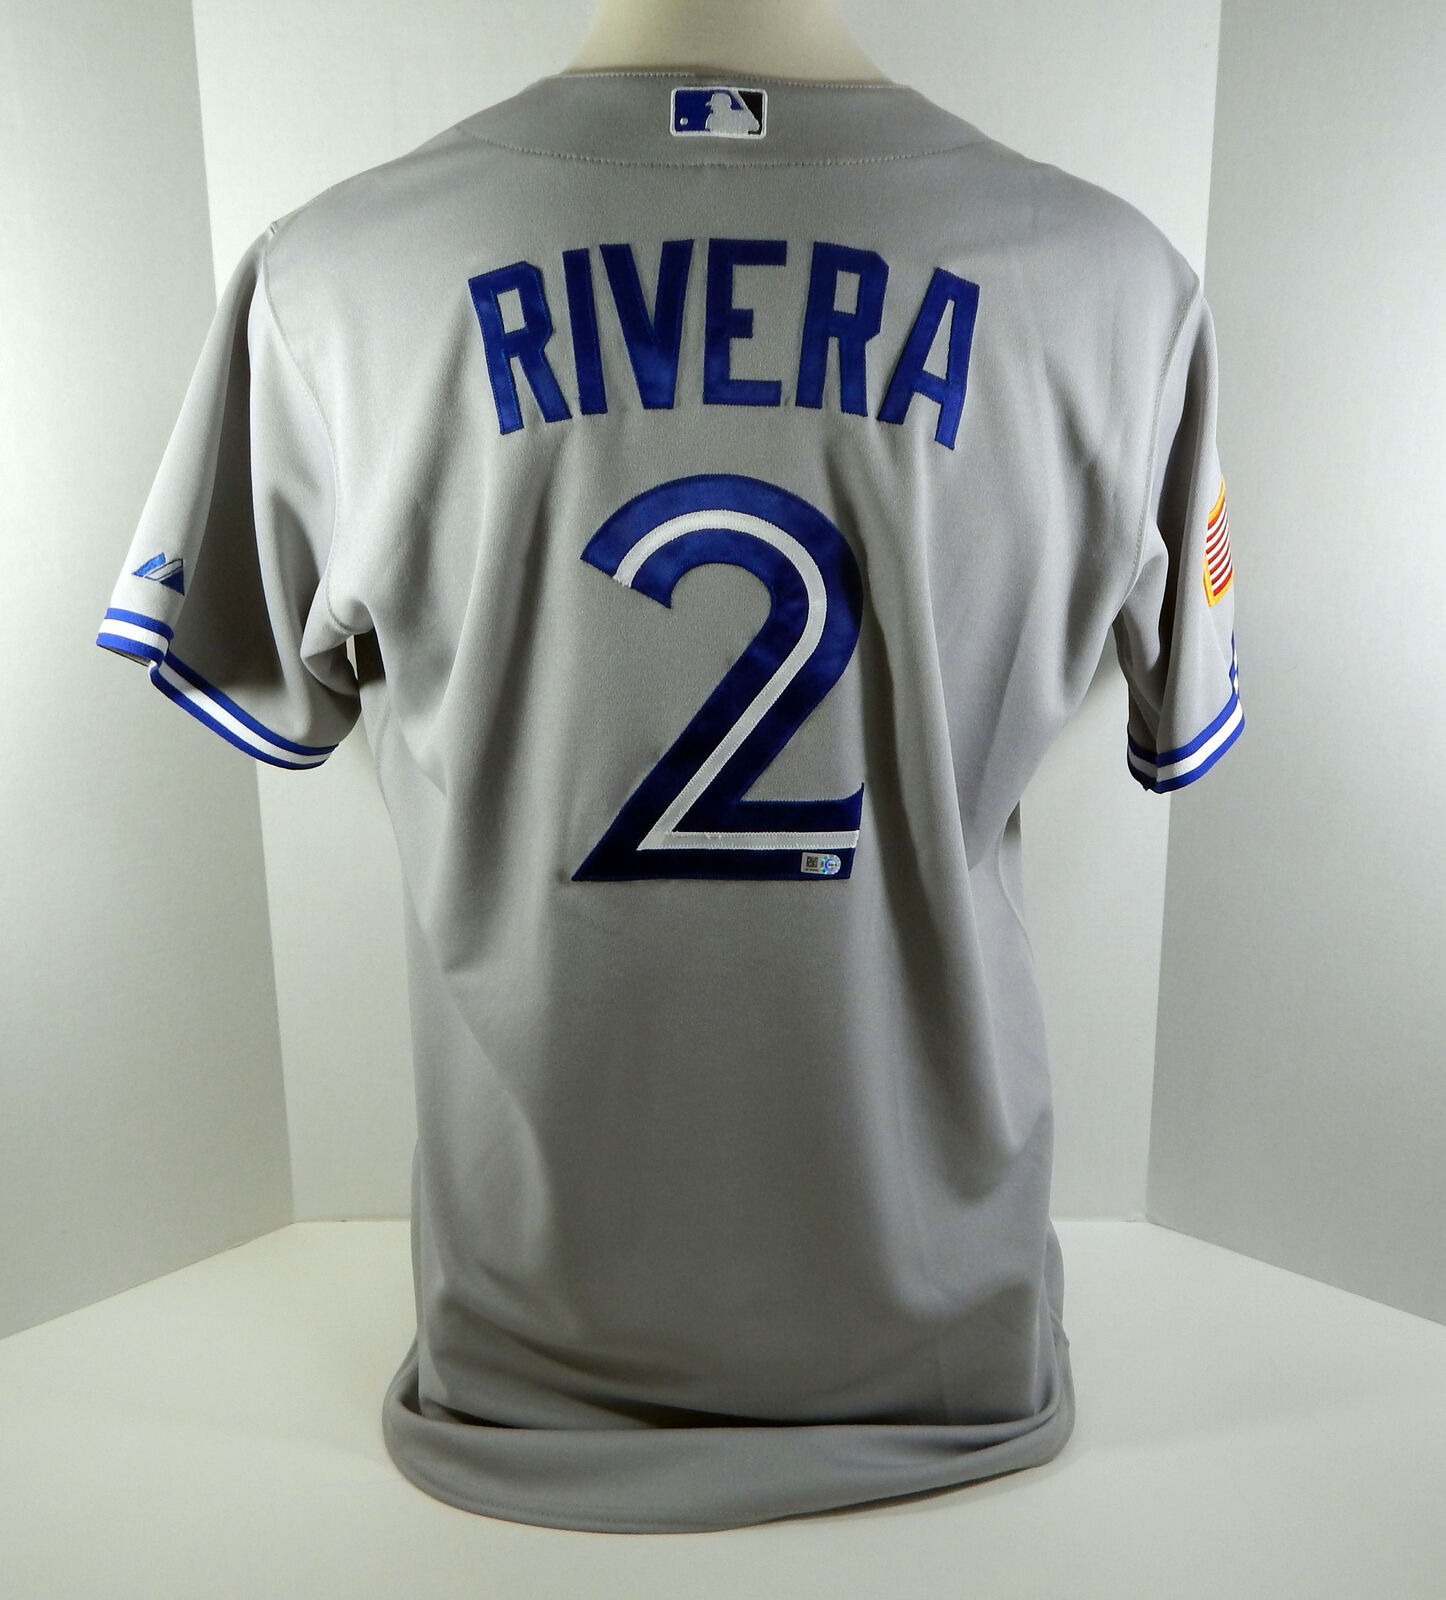 2015 Toronto Blue Jays Luis Rivera #2 Game Used Grey Indepence Memorial Jersey